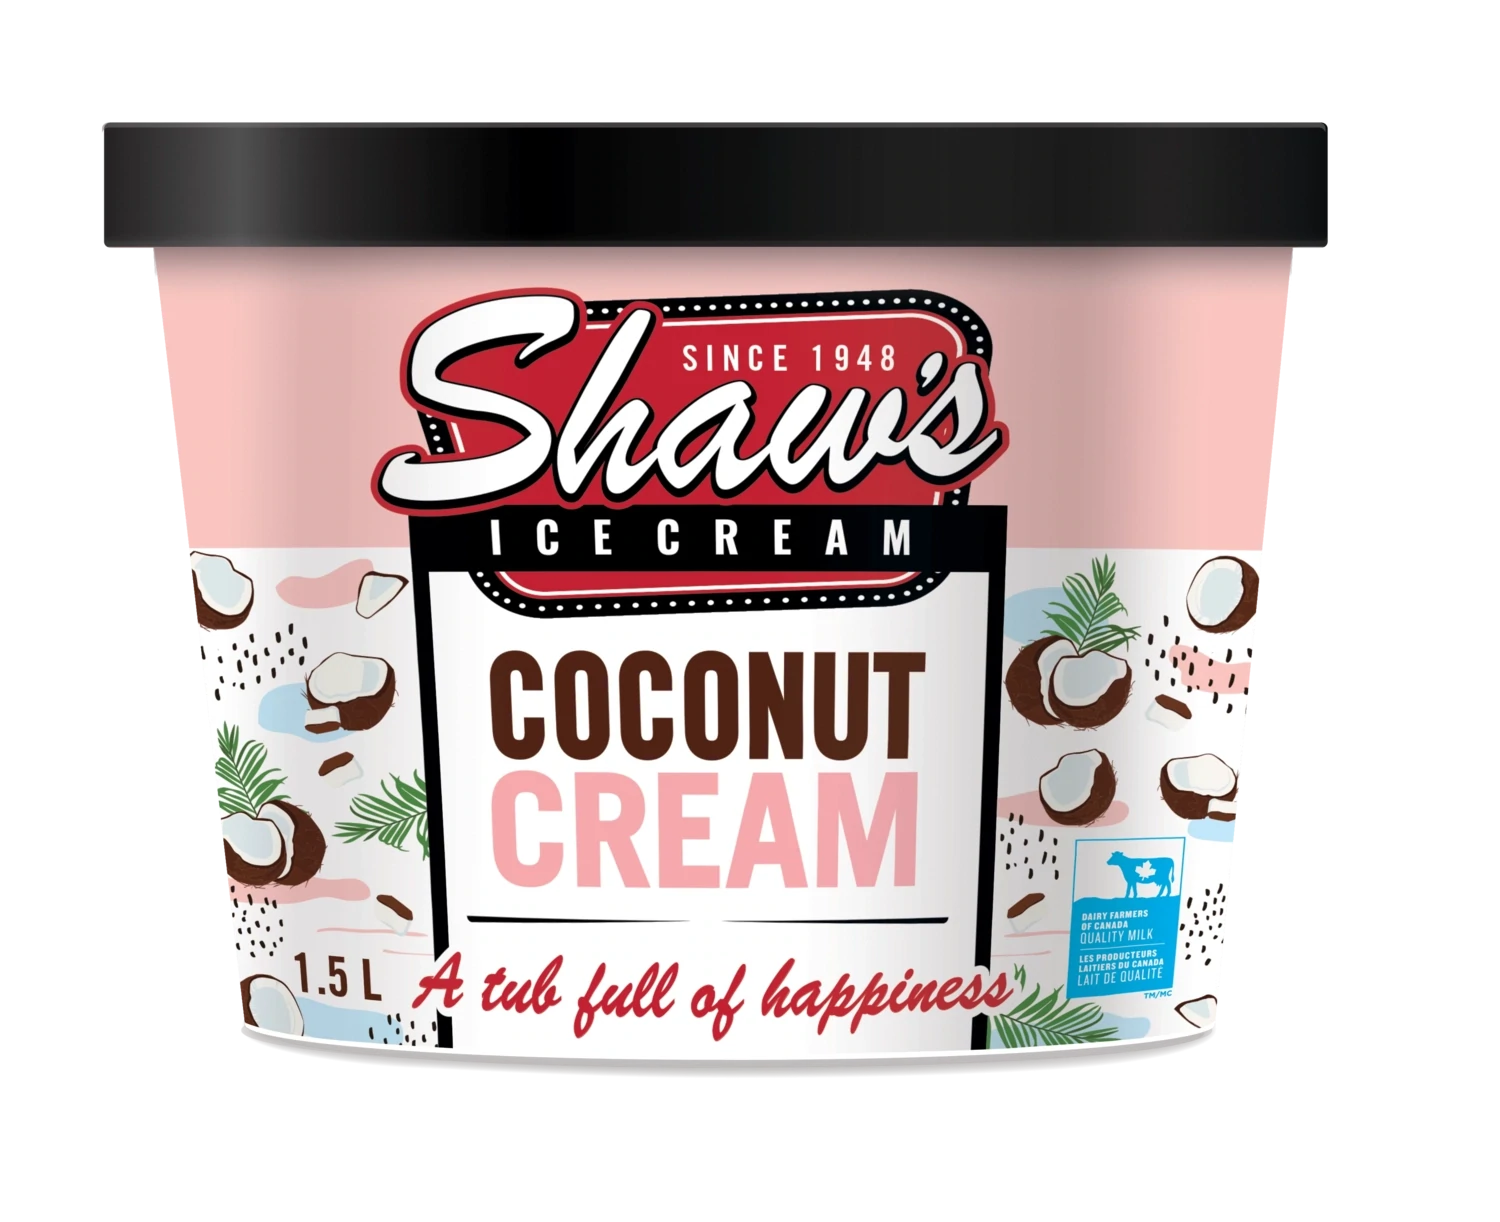 Shaw's Ice Cream - Coconut Cream